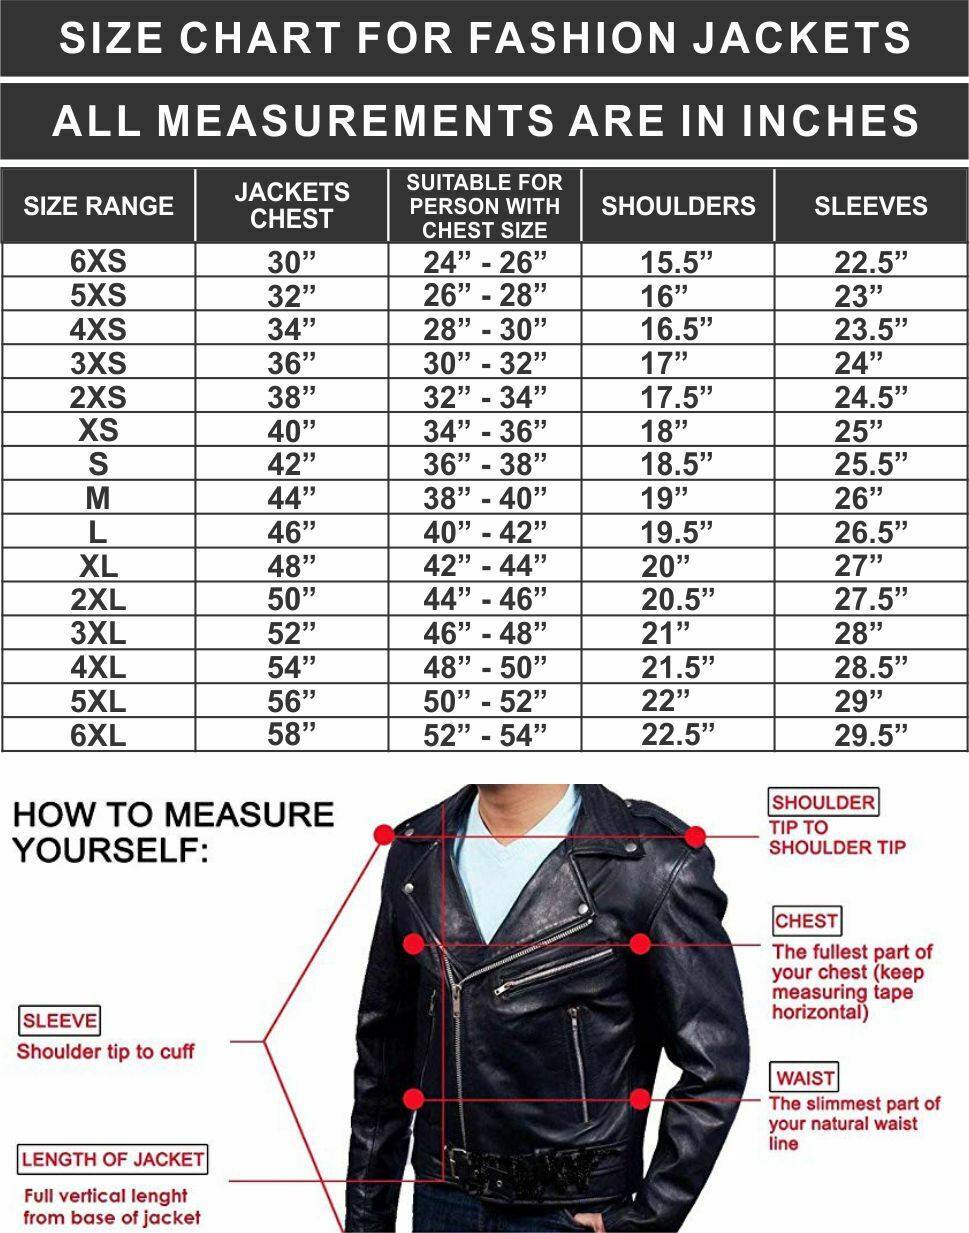 David Hasselhoff Baywatch Red Cotton Trendy  Jacket - Battlestar Clothing & Gears Co